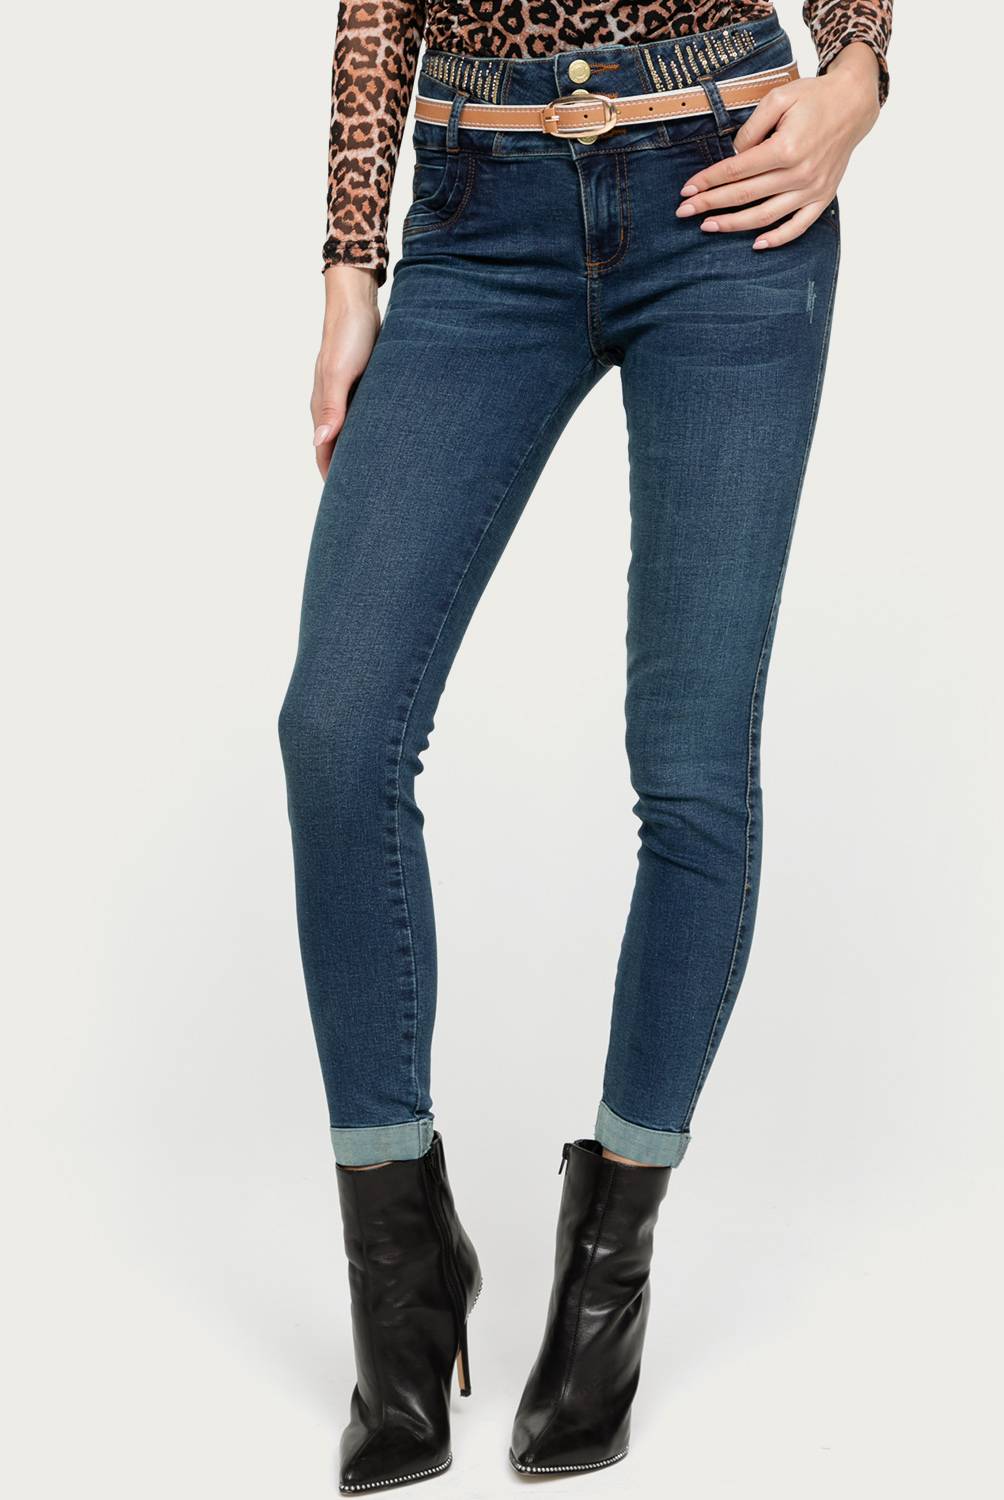 MOSSIMO - Jeans skinny tiro alto mujer